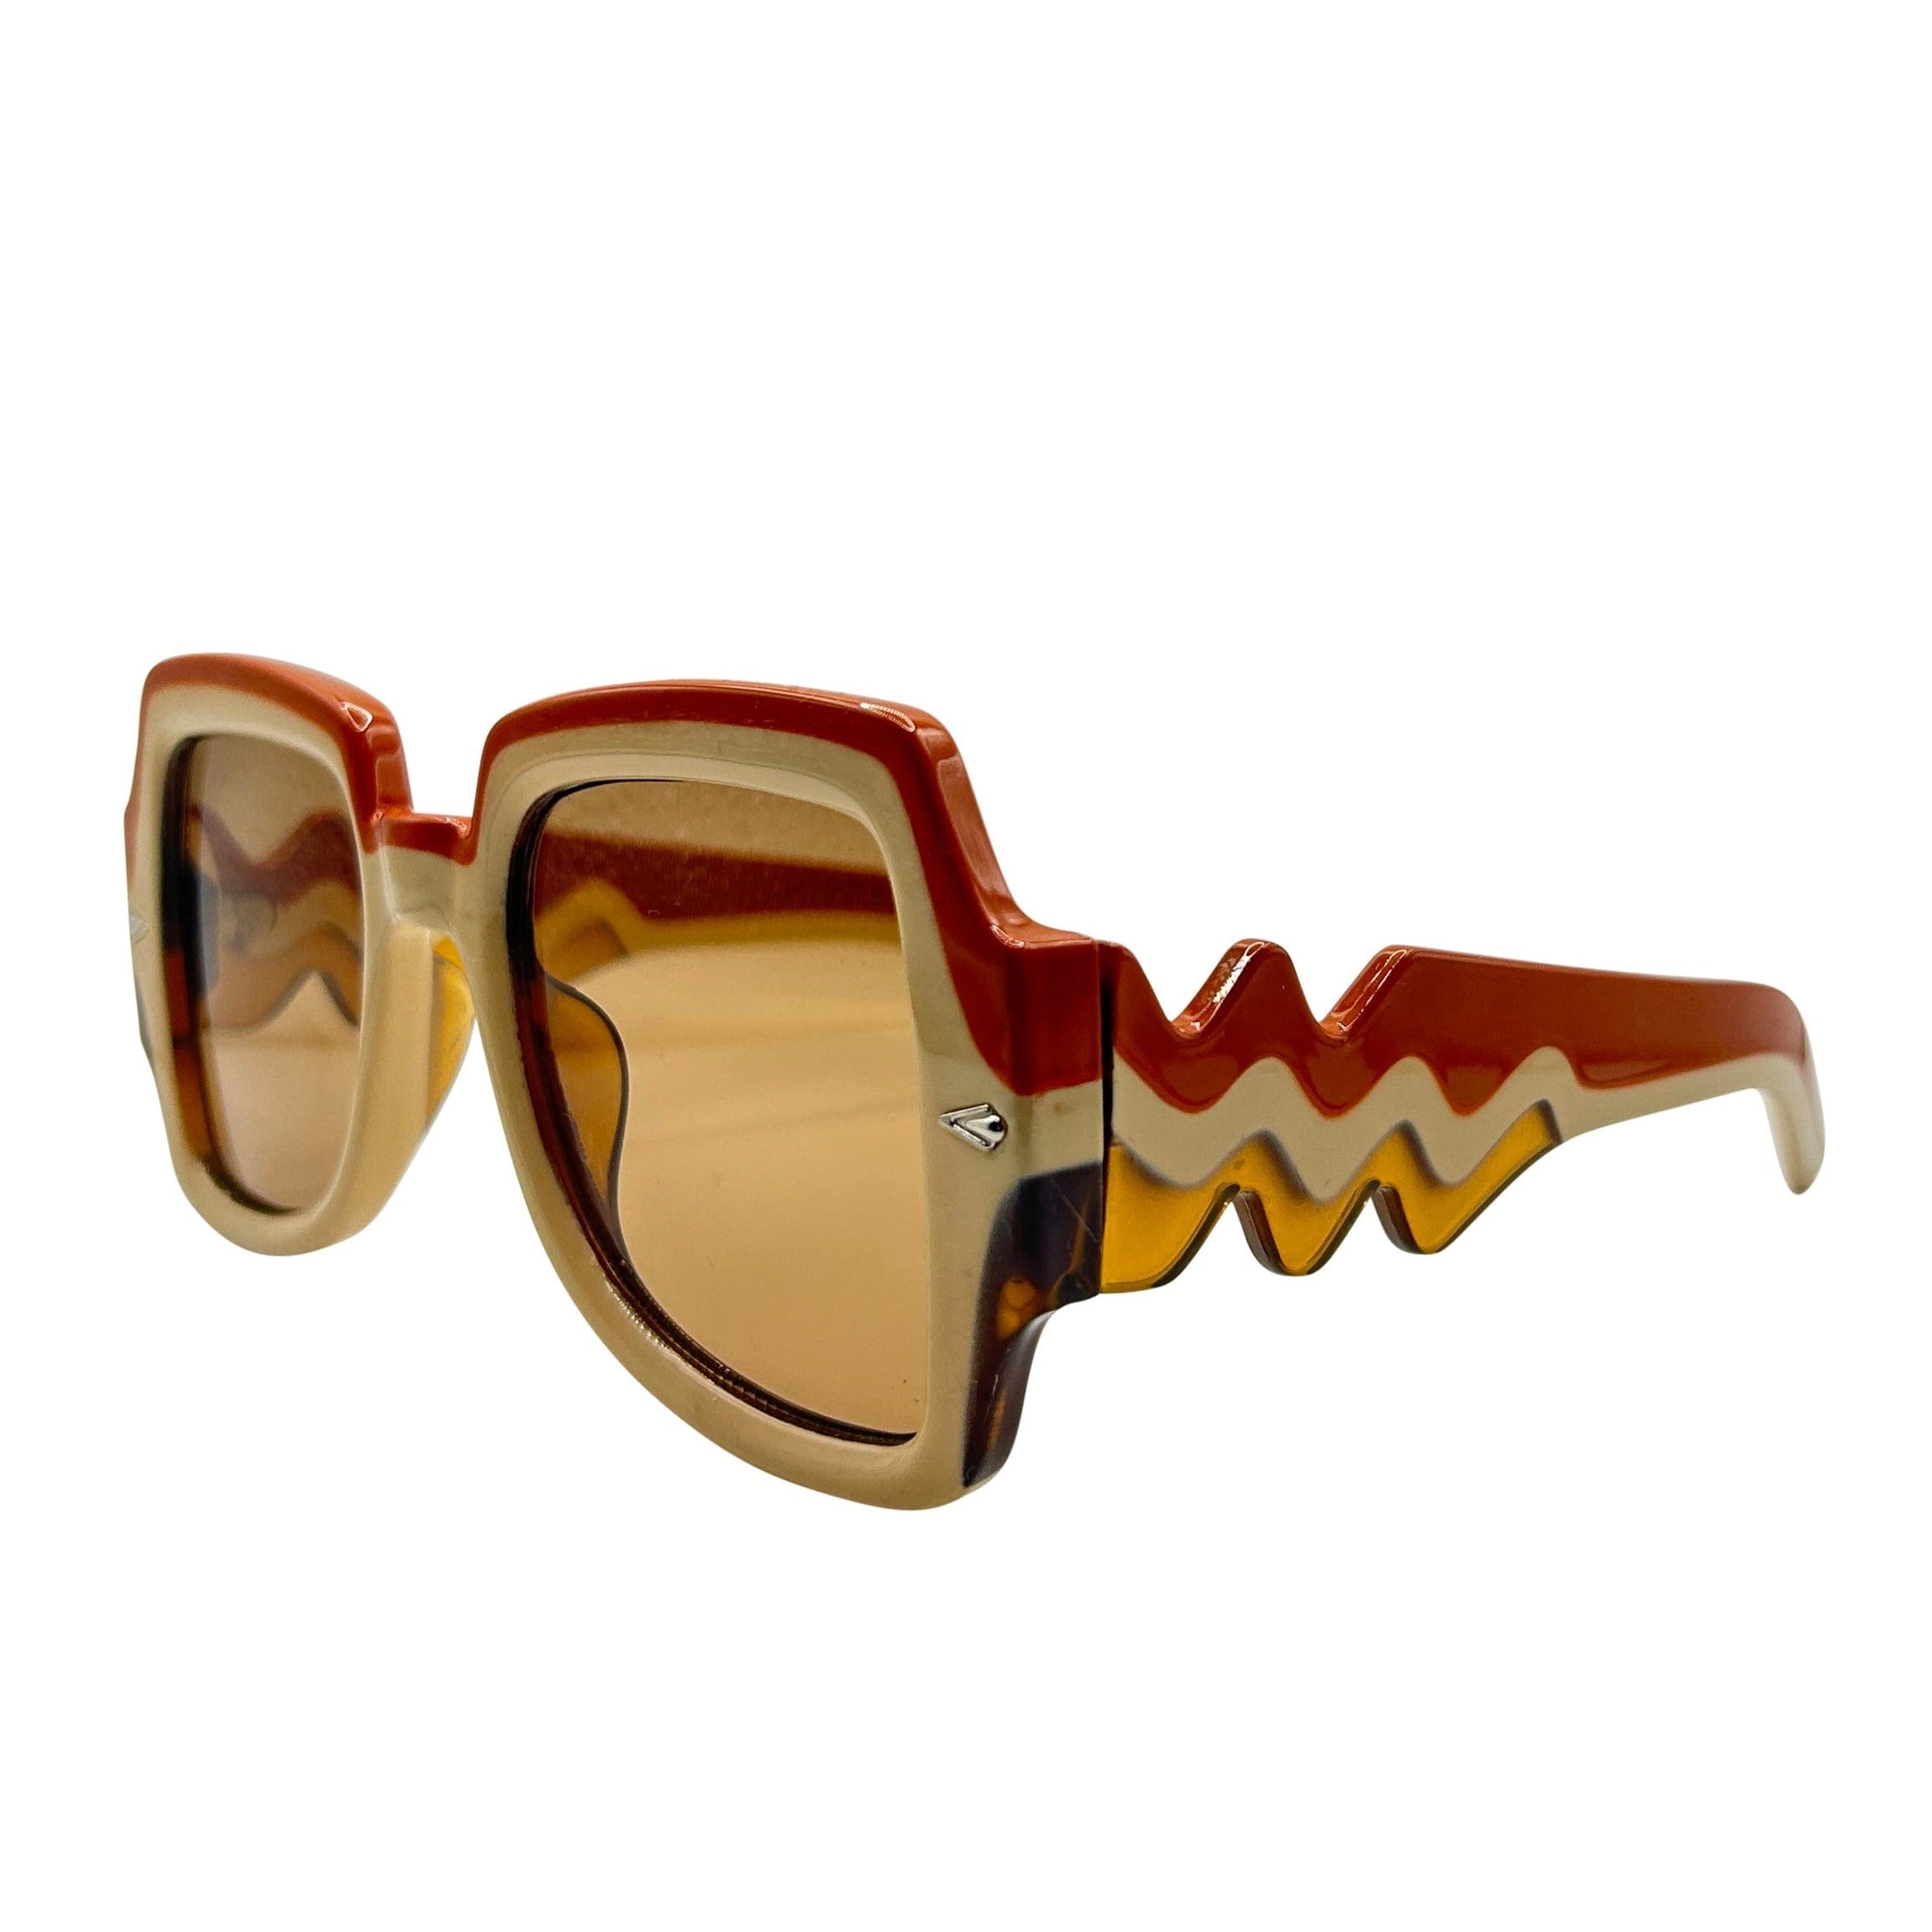 WEEKEND Square 70s Retro Sunglasses